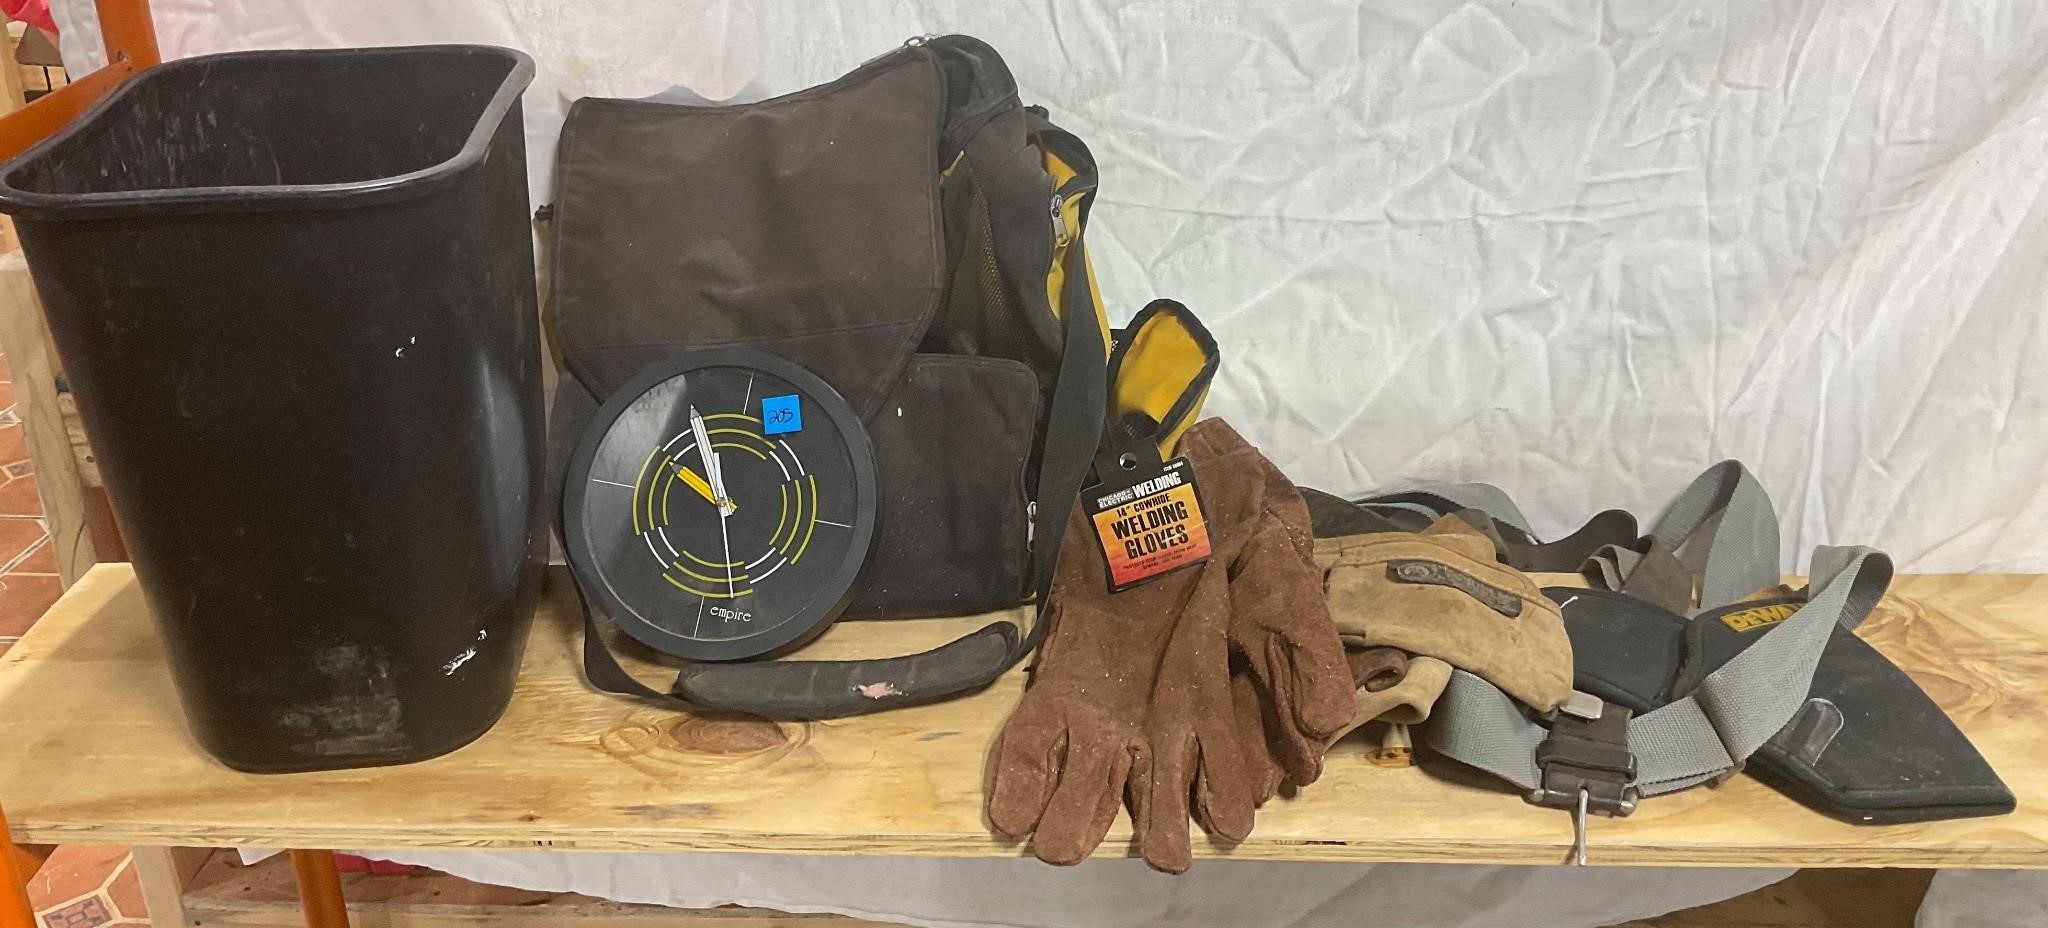 14” Welding Gloves, Work Belt, Bag, Clock